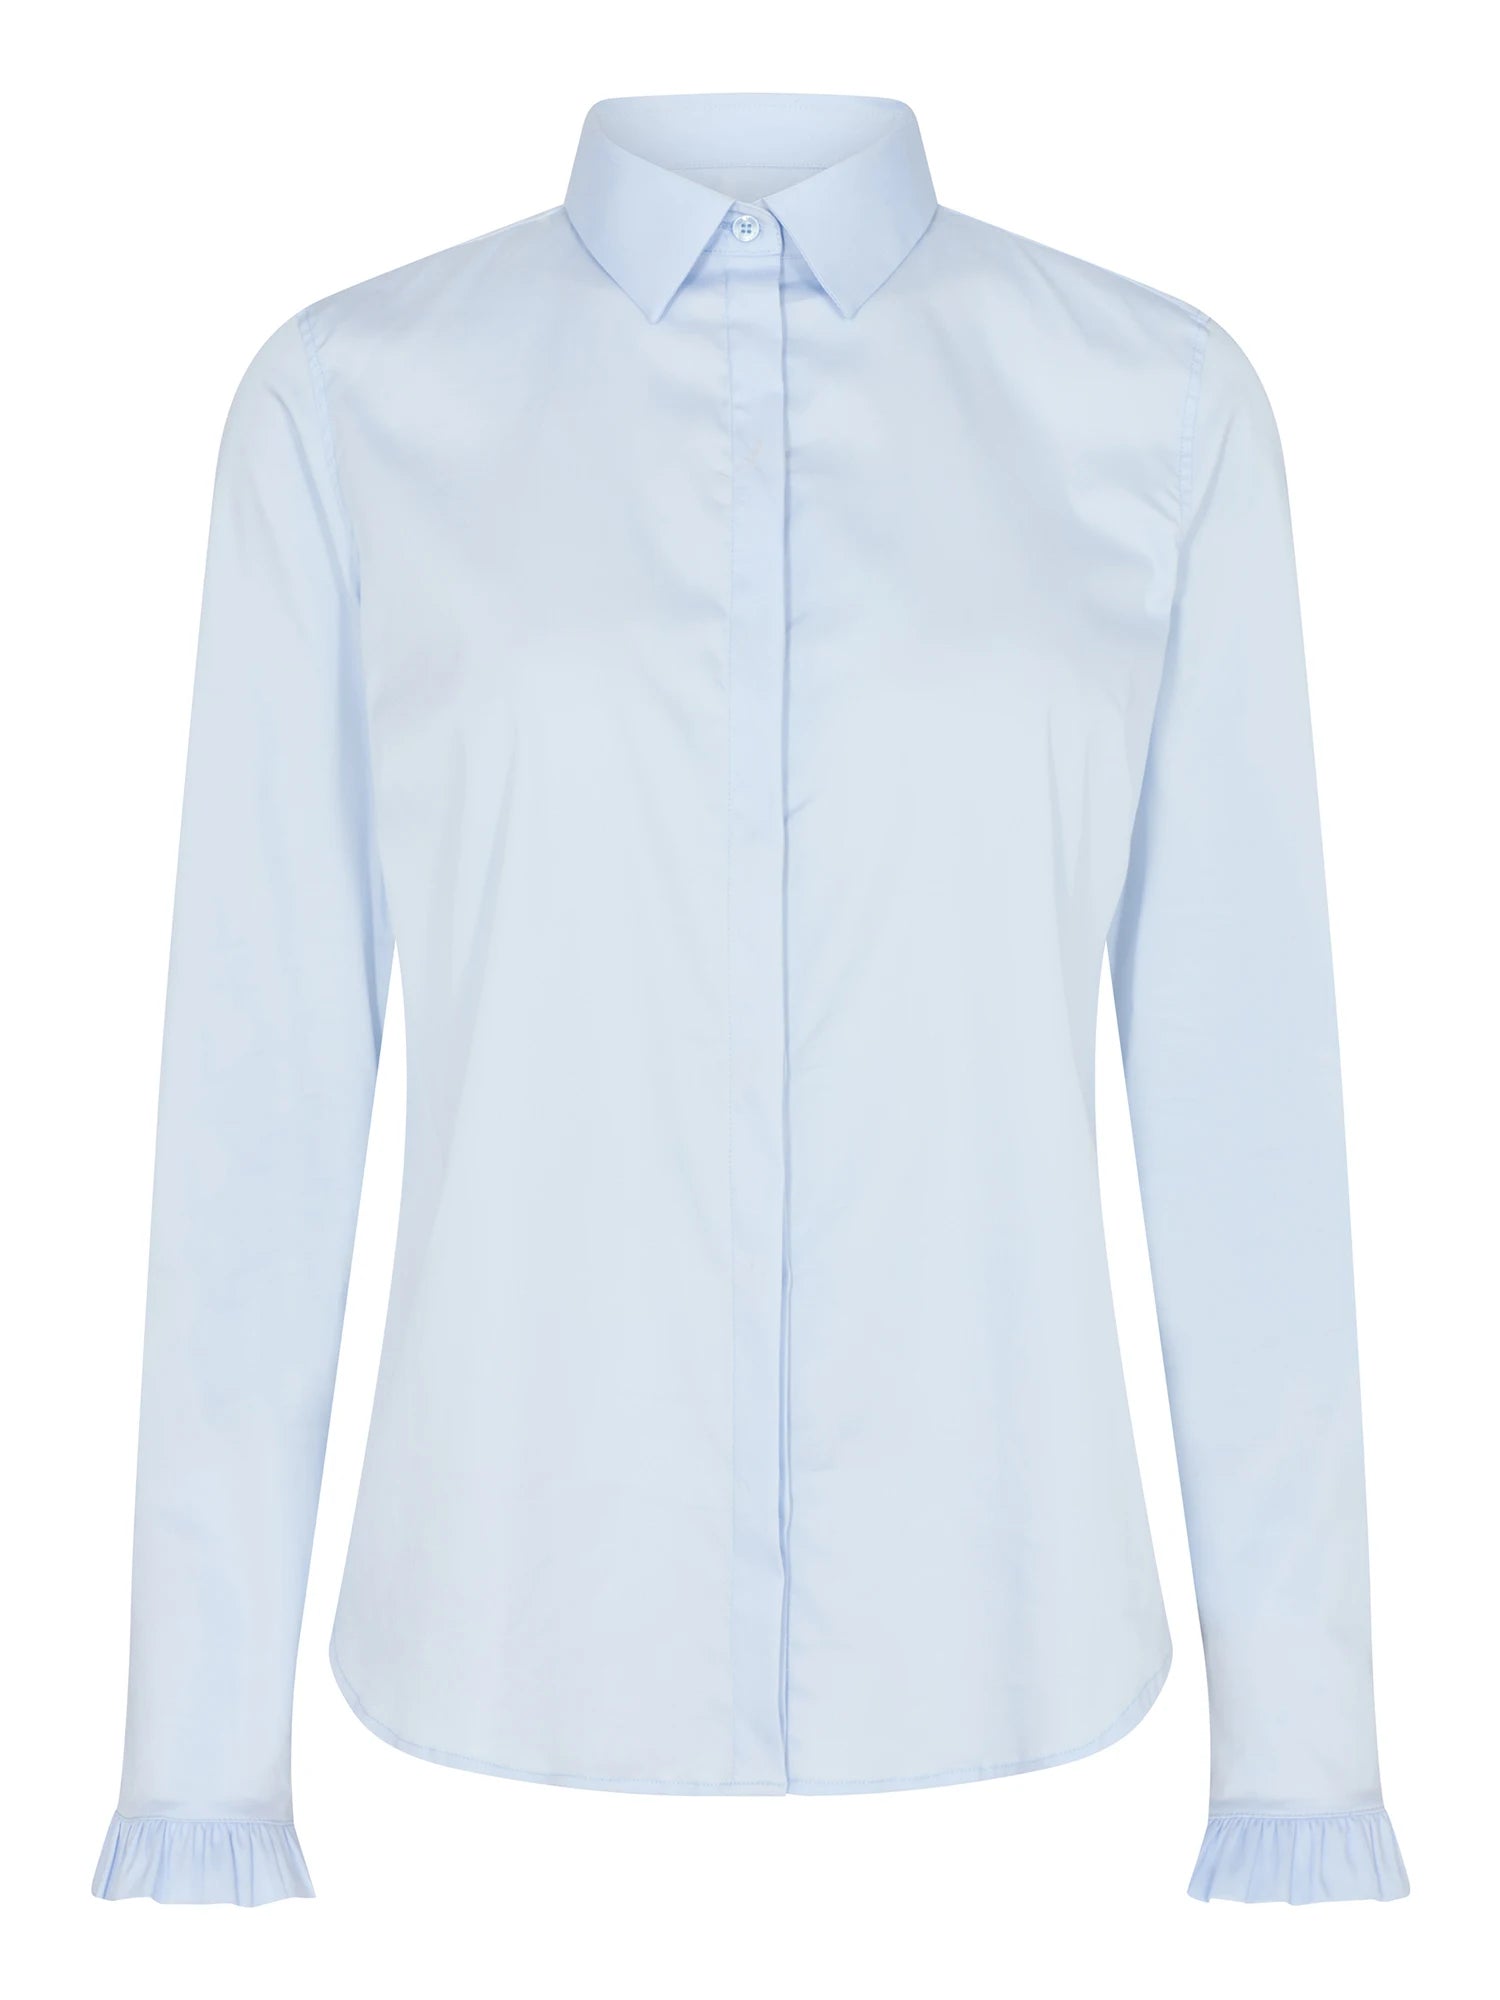 Mattie Flip Shirt, Light Blue, Skjorte fra Mos Mosh